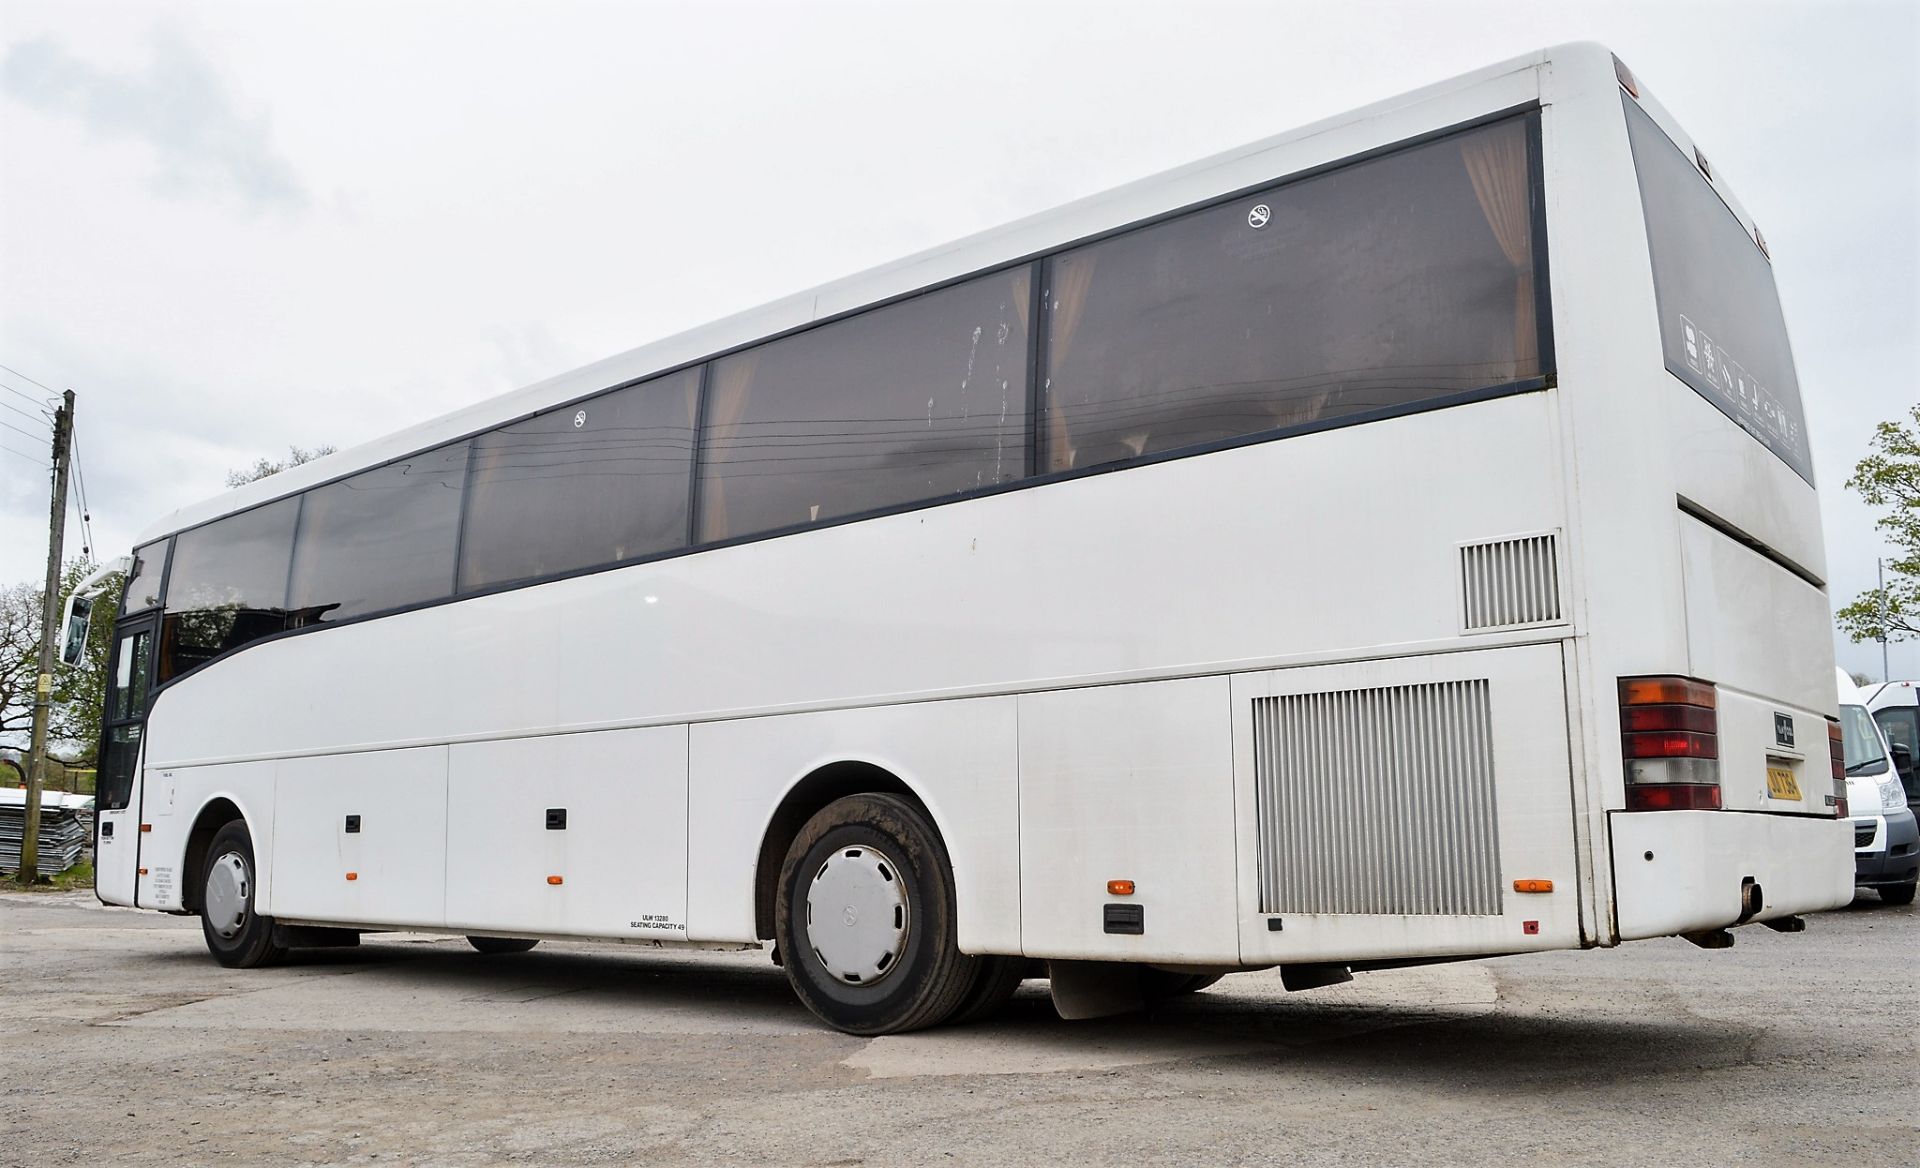 Scania Vanhool Alize 51 seat luxury coach Registration Number: JUI 7364 Date of registration: 26/ - Image 2 of 12